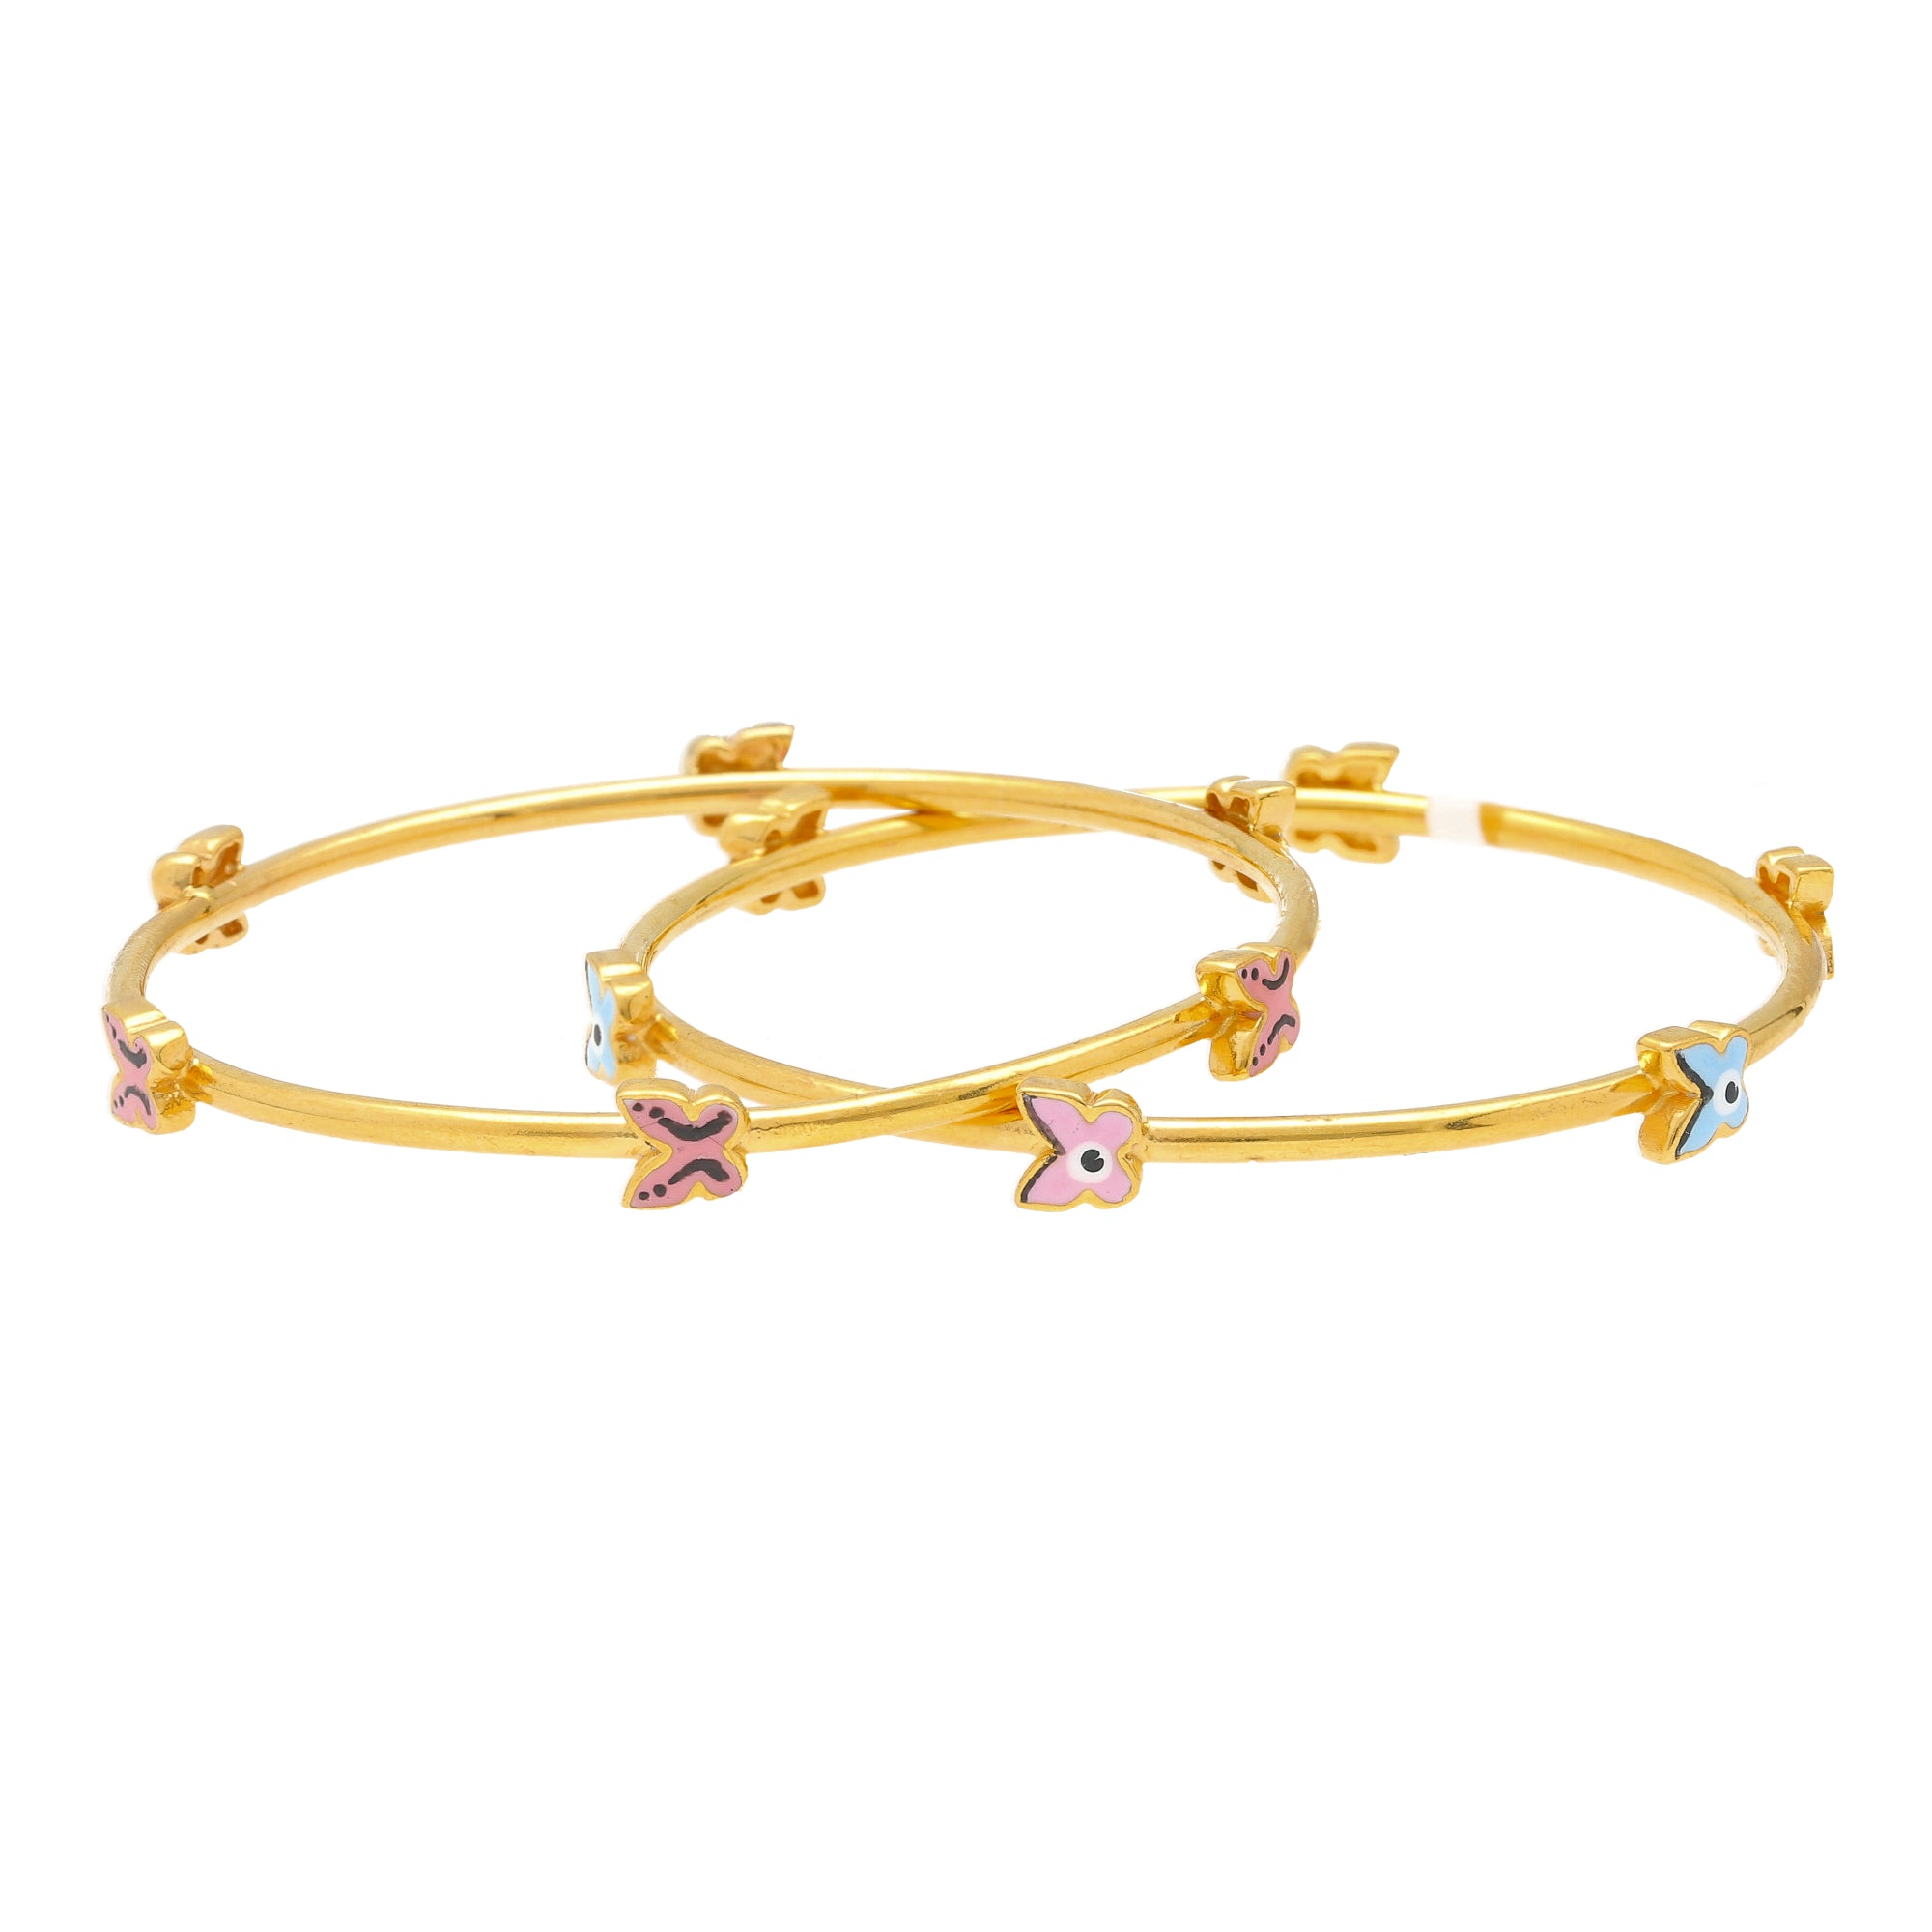 Showroom of Handmade 22k gold baby bracelet | Jewelxy - 240128